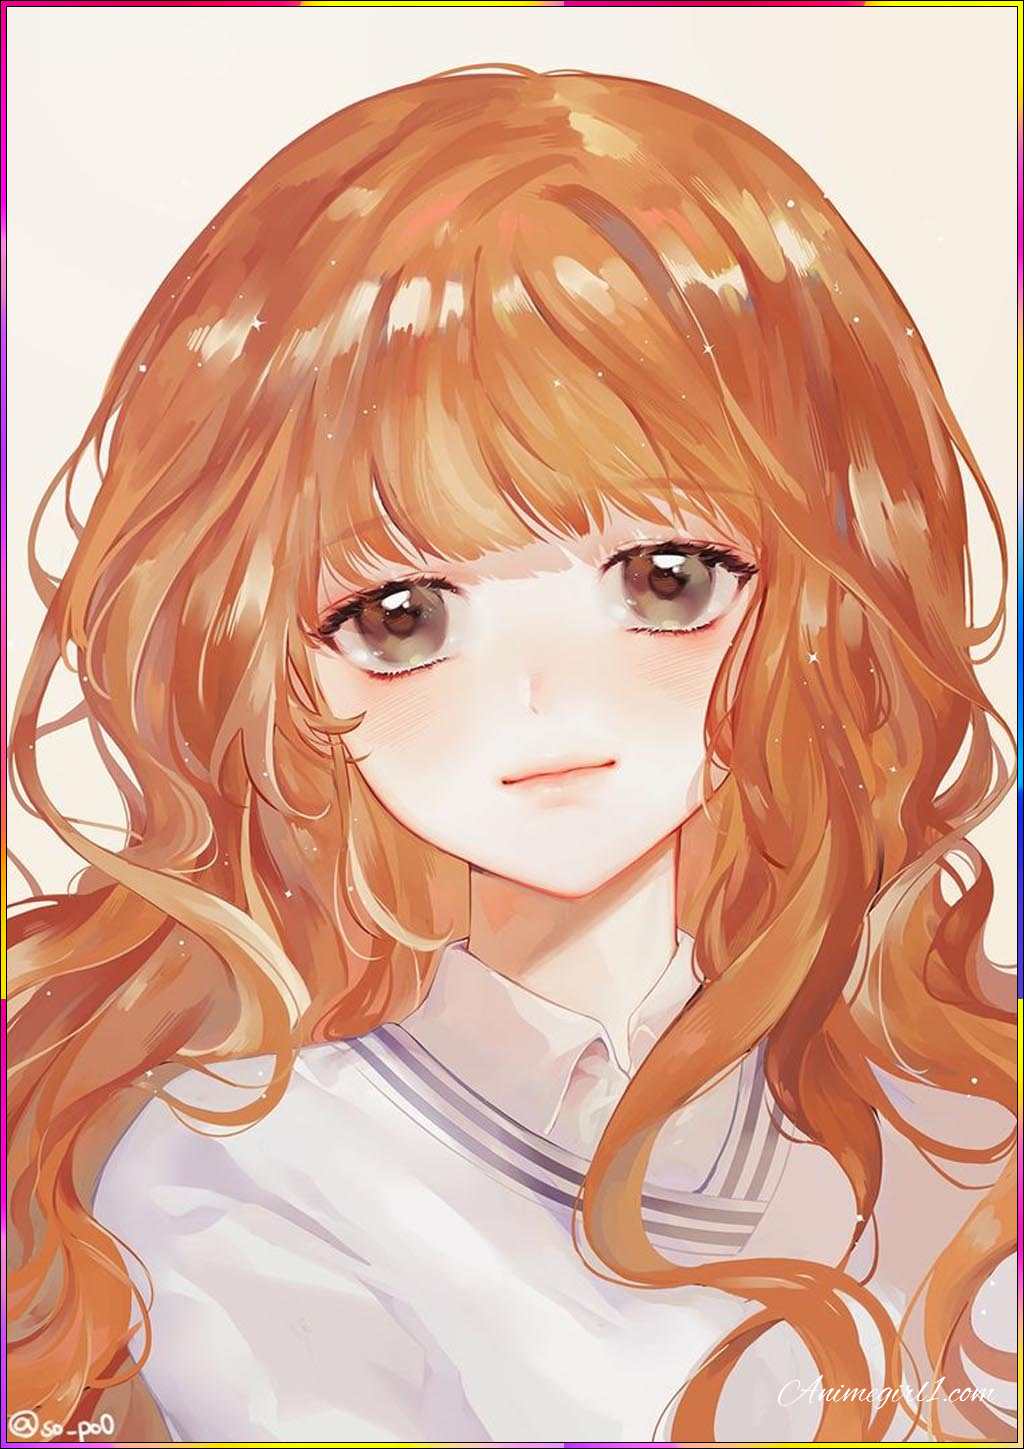 anime girl with orange hair
